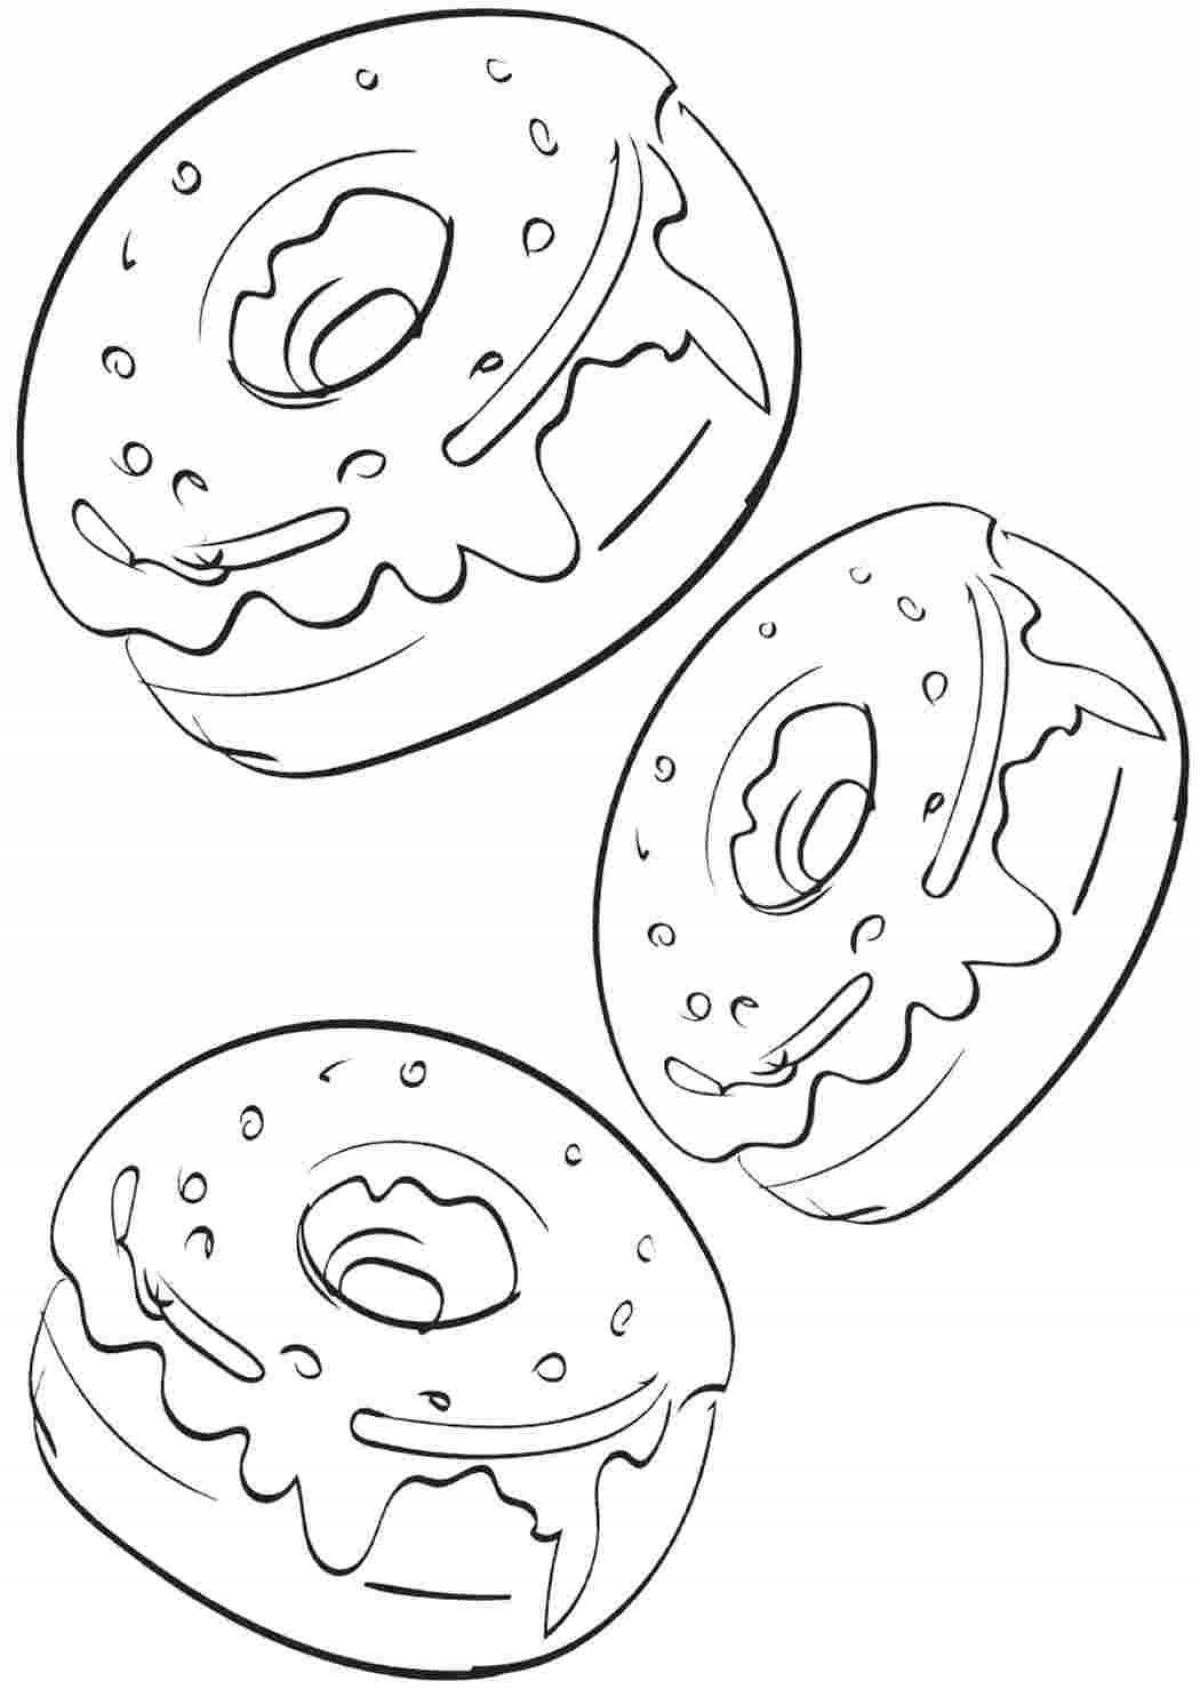 Children's donut #2